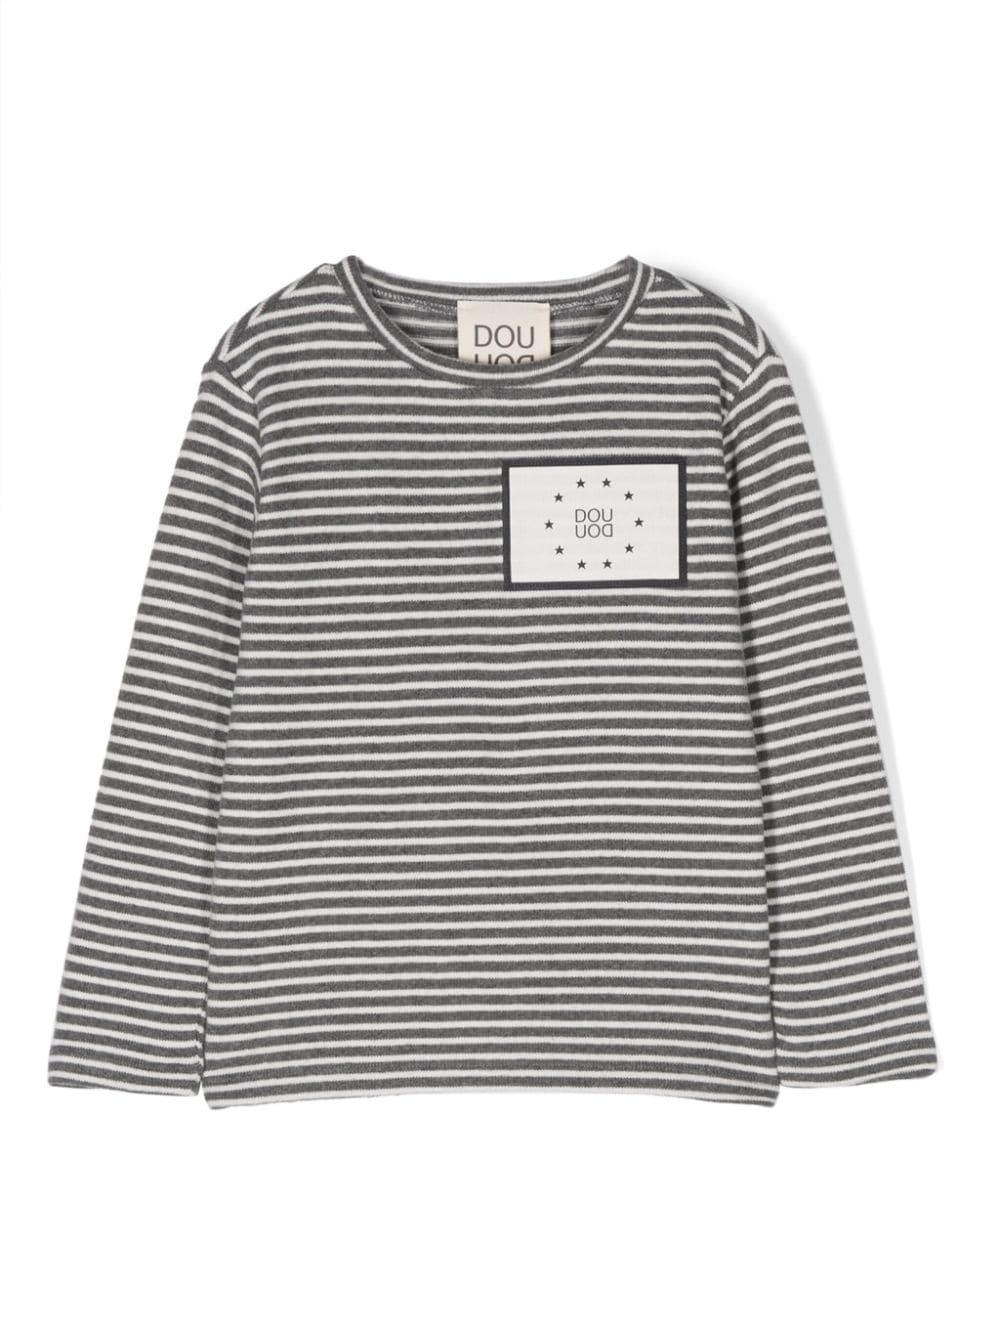 Douuod Kids' Promoteo Striped Cotton T-shirt In Grey